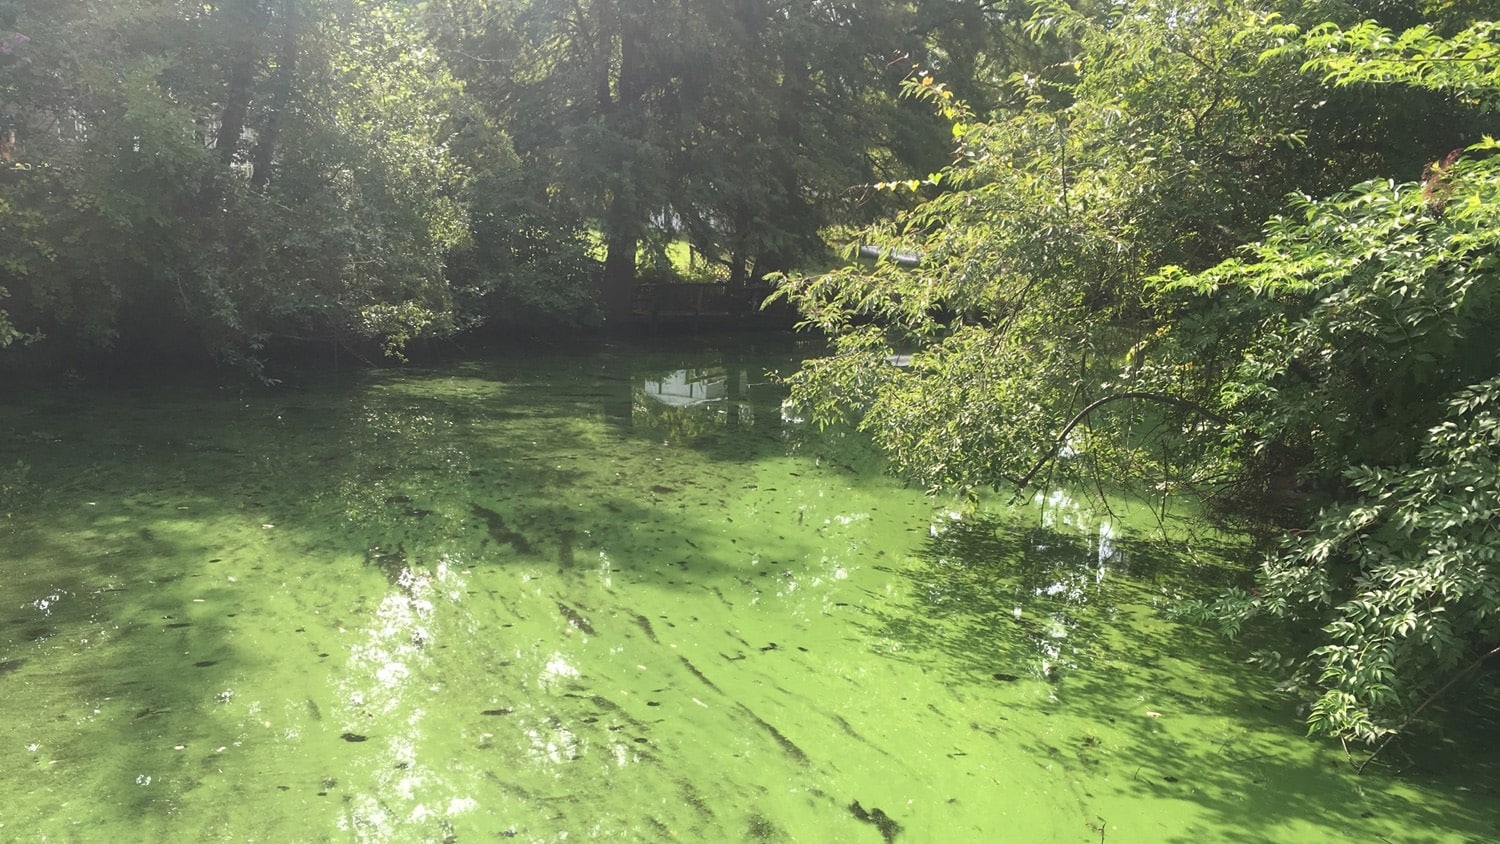 Scum-forming bloom of toxic cyanobacteria Microcystis in North Carolina coastal waters